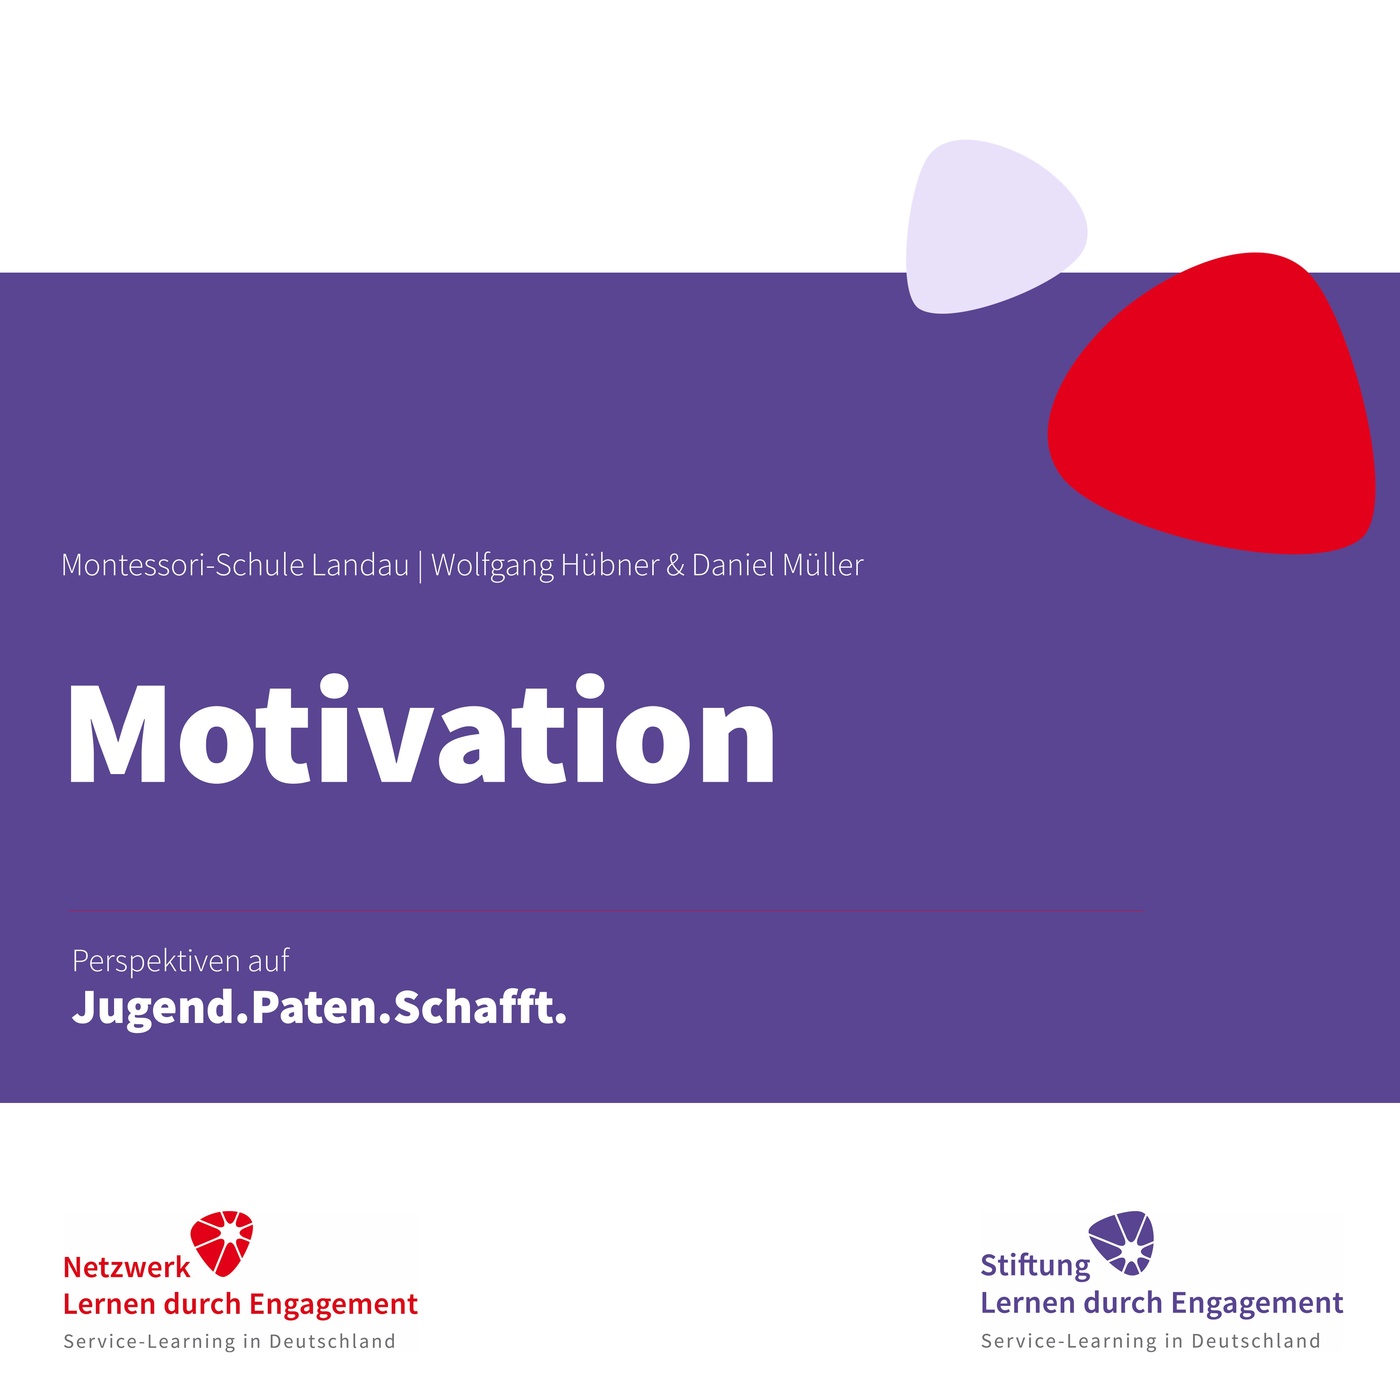 Im Fokus | Montessori-Schule Landau: Motivation